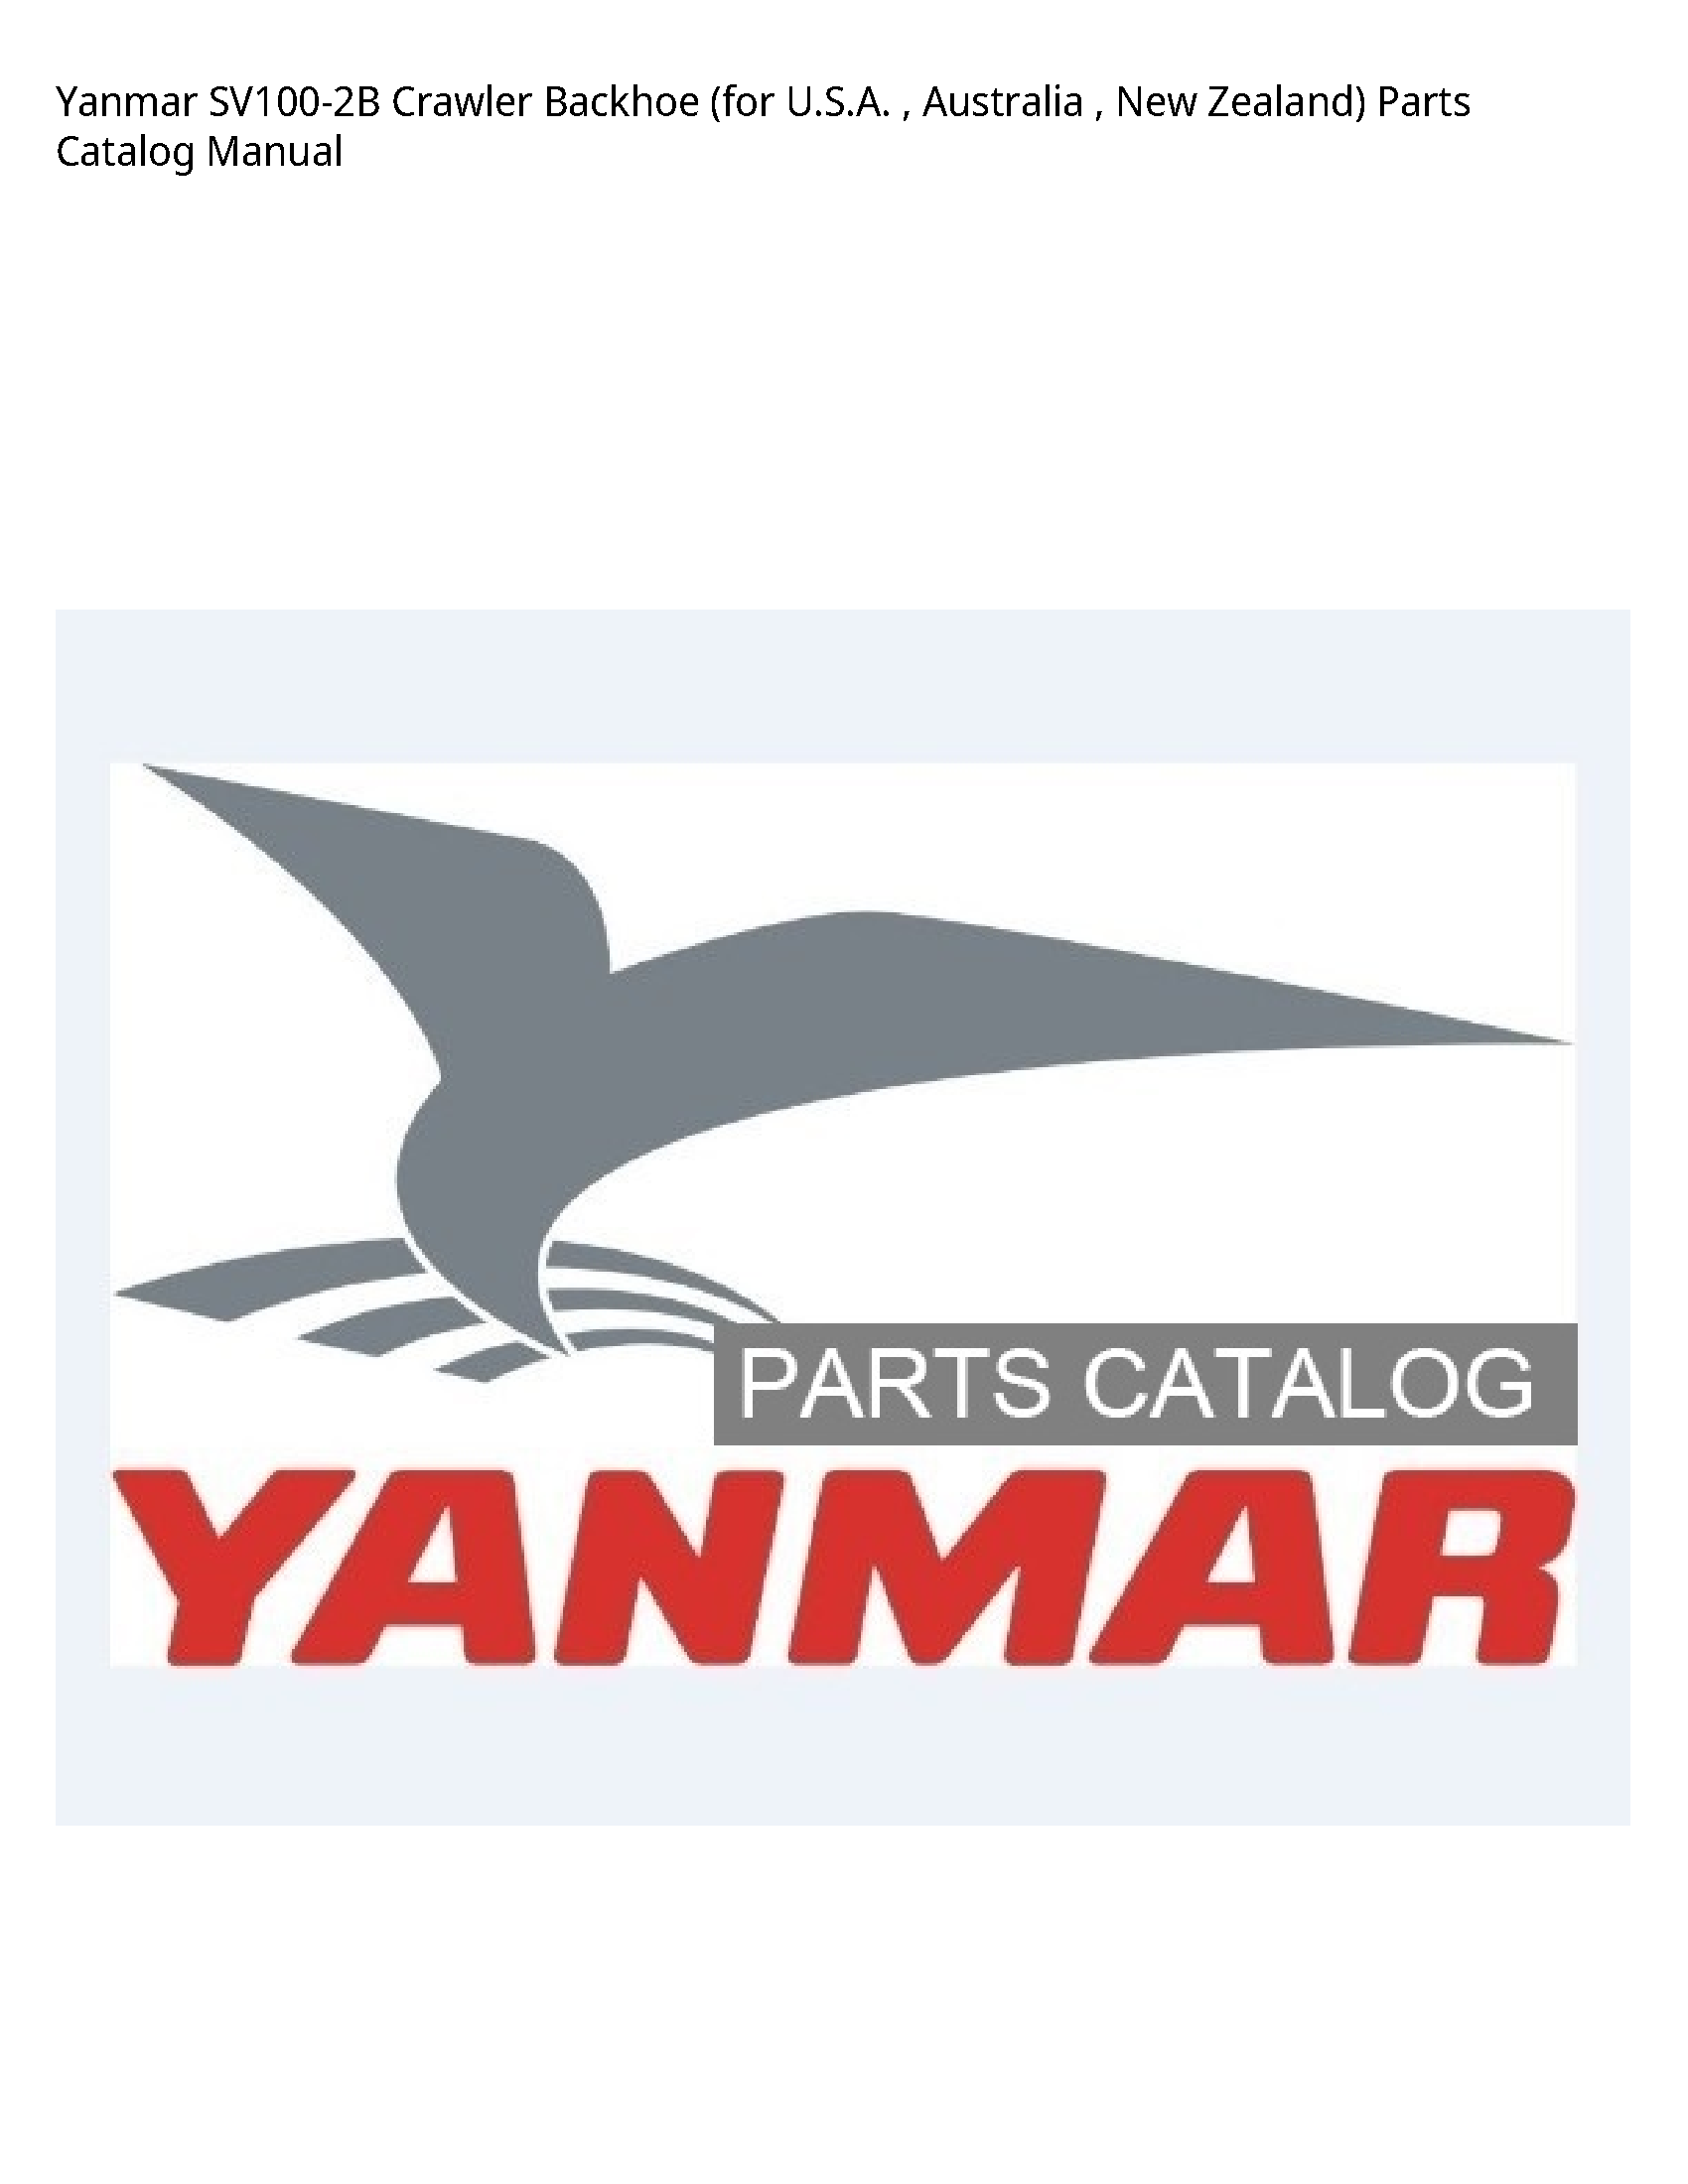 Yanmar SV100-2B Crawler Backhoe (for U.S.A. Australia New Zealand) Parts Catalog manual